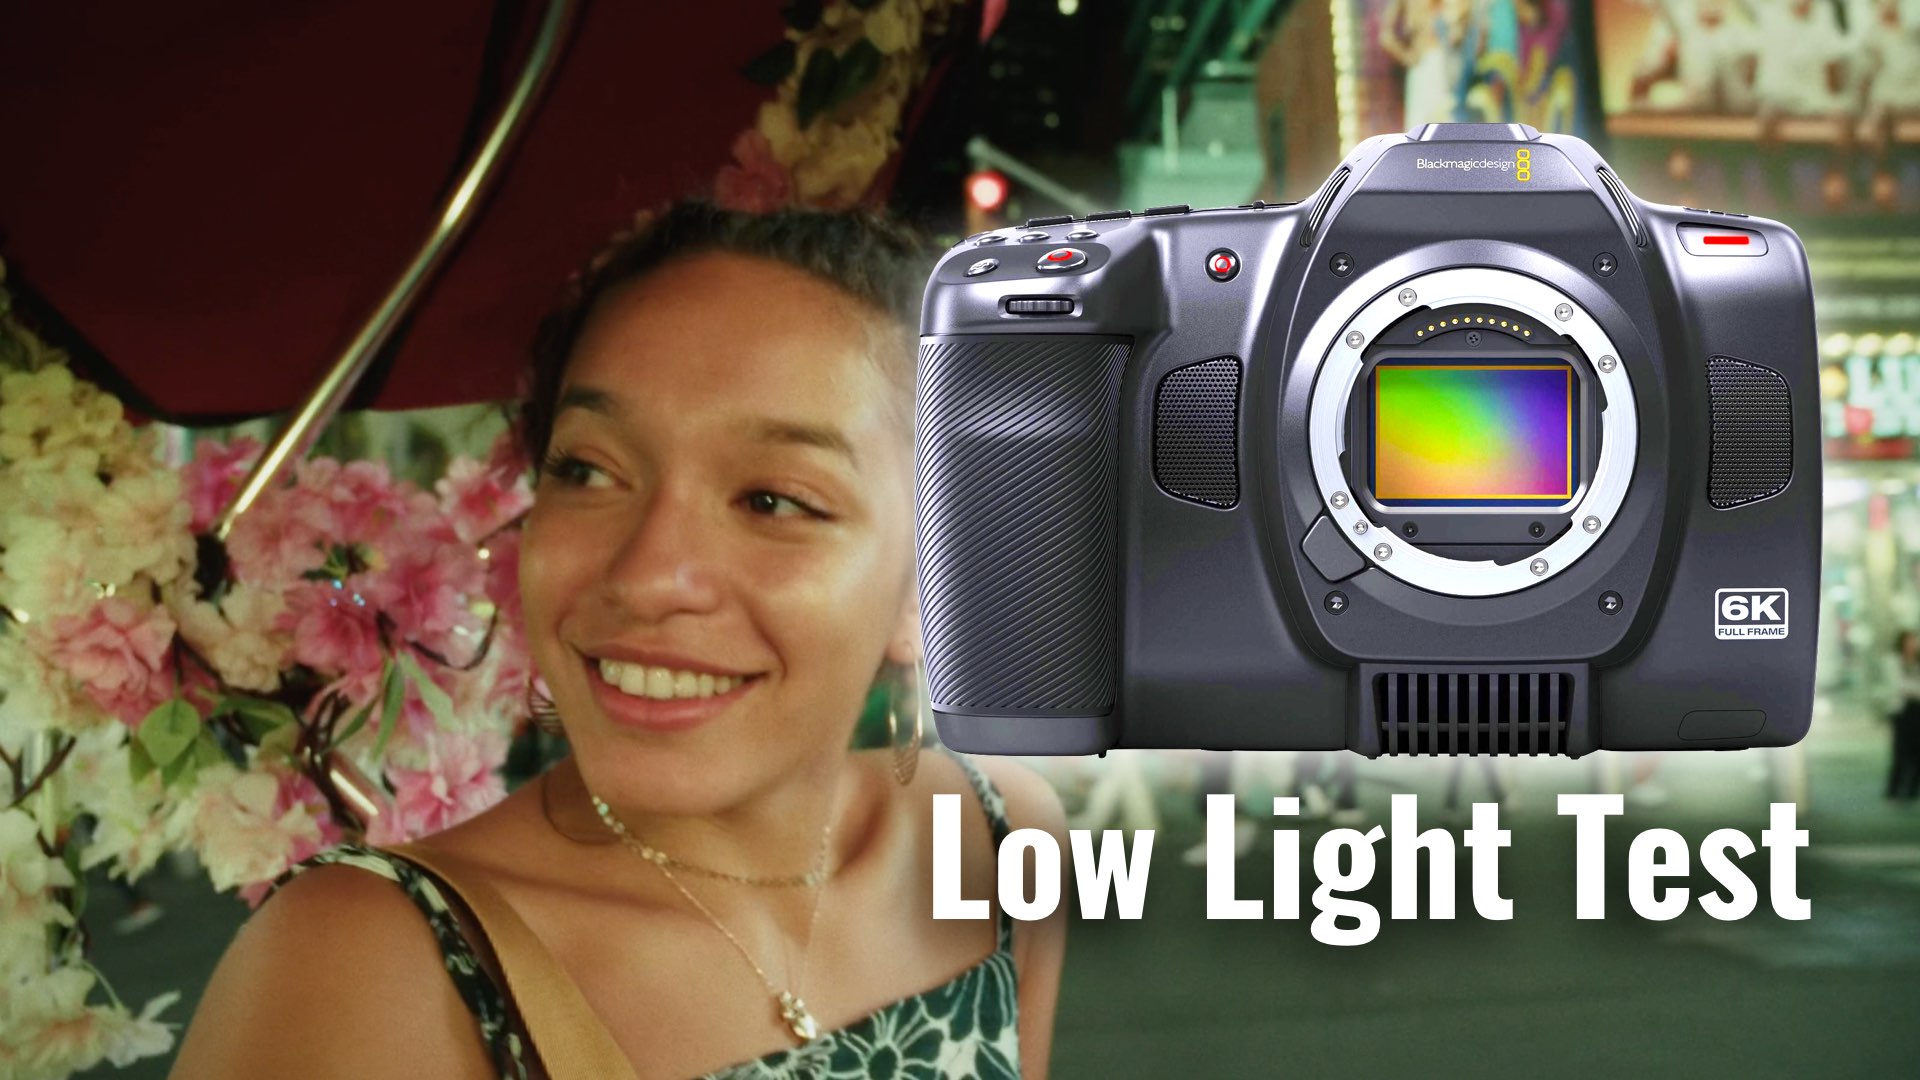 Blackmagic Cinema Camera 6K: Low Light Test